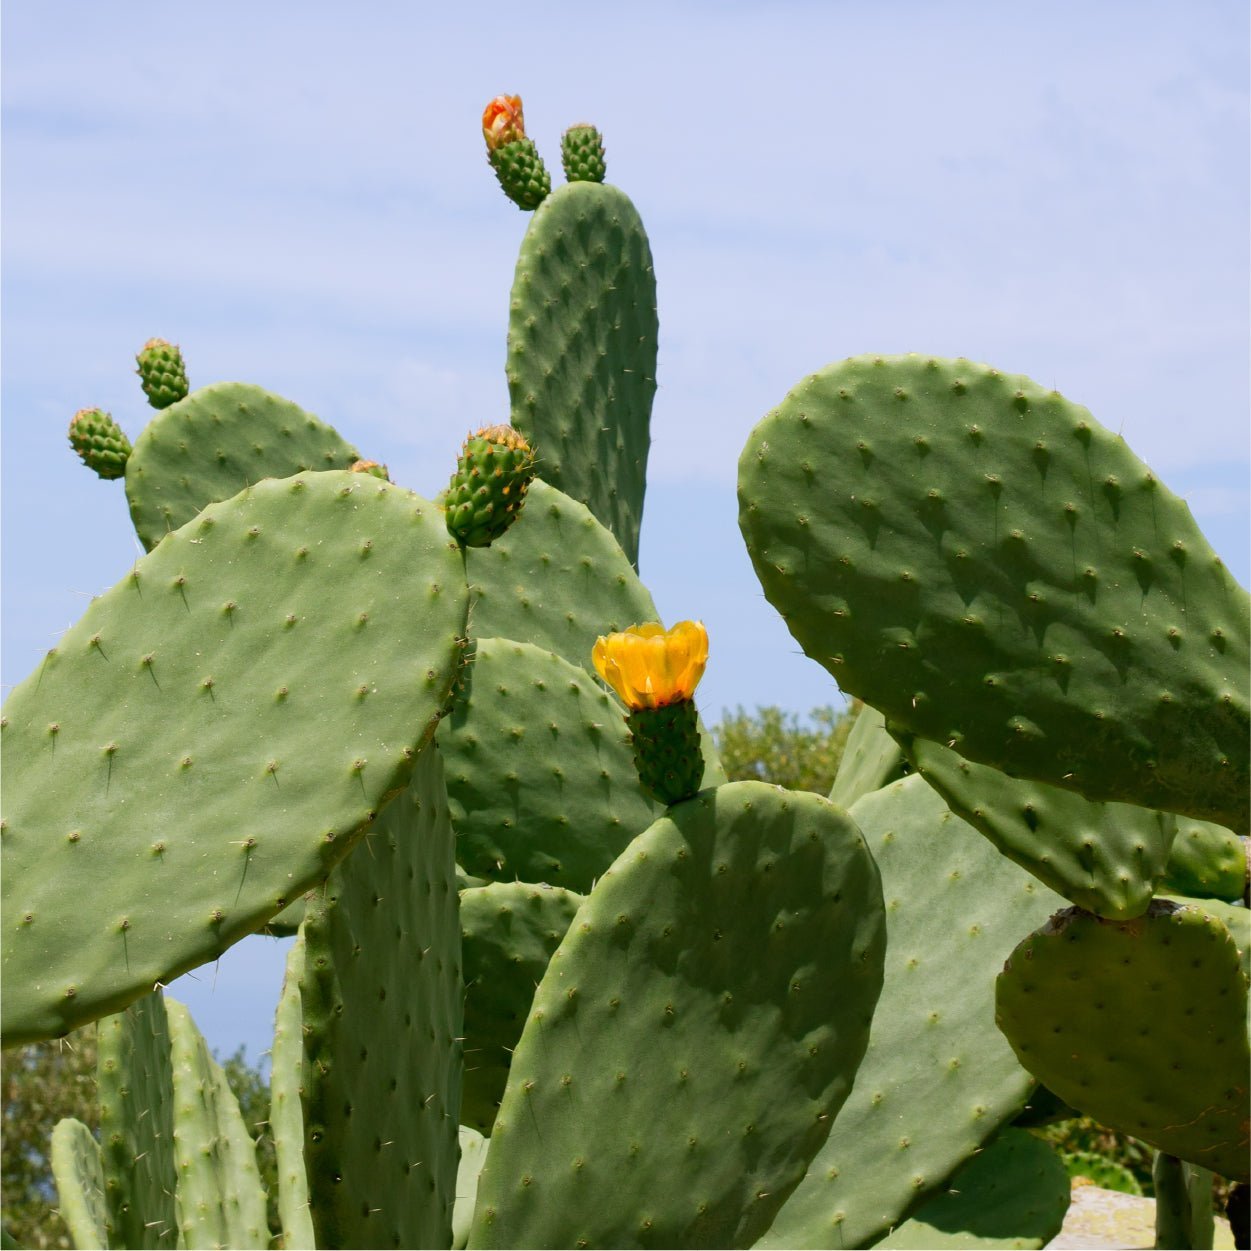 LICORNE Vegan Cactus Deep Moist Lotion LICORNE